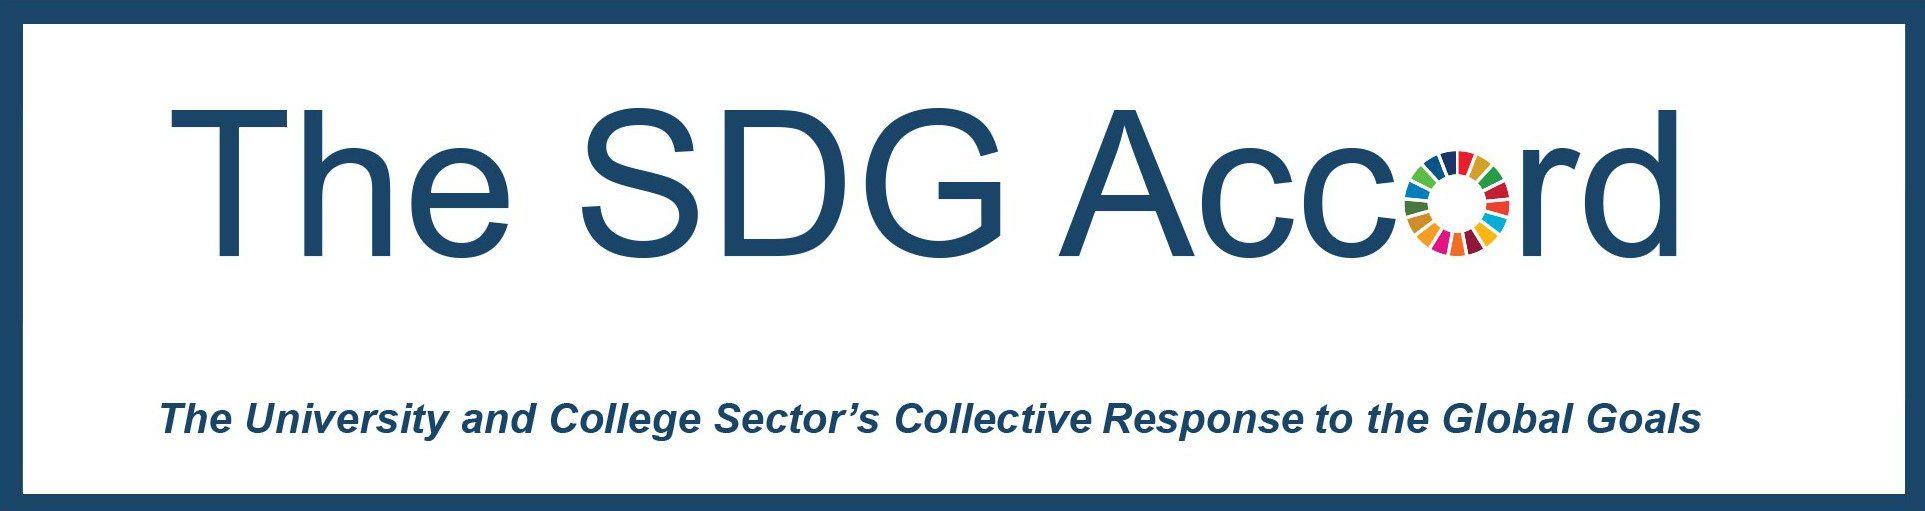 SDG Accord logo